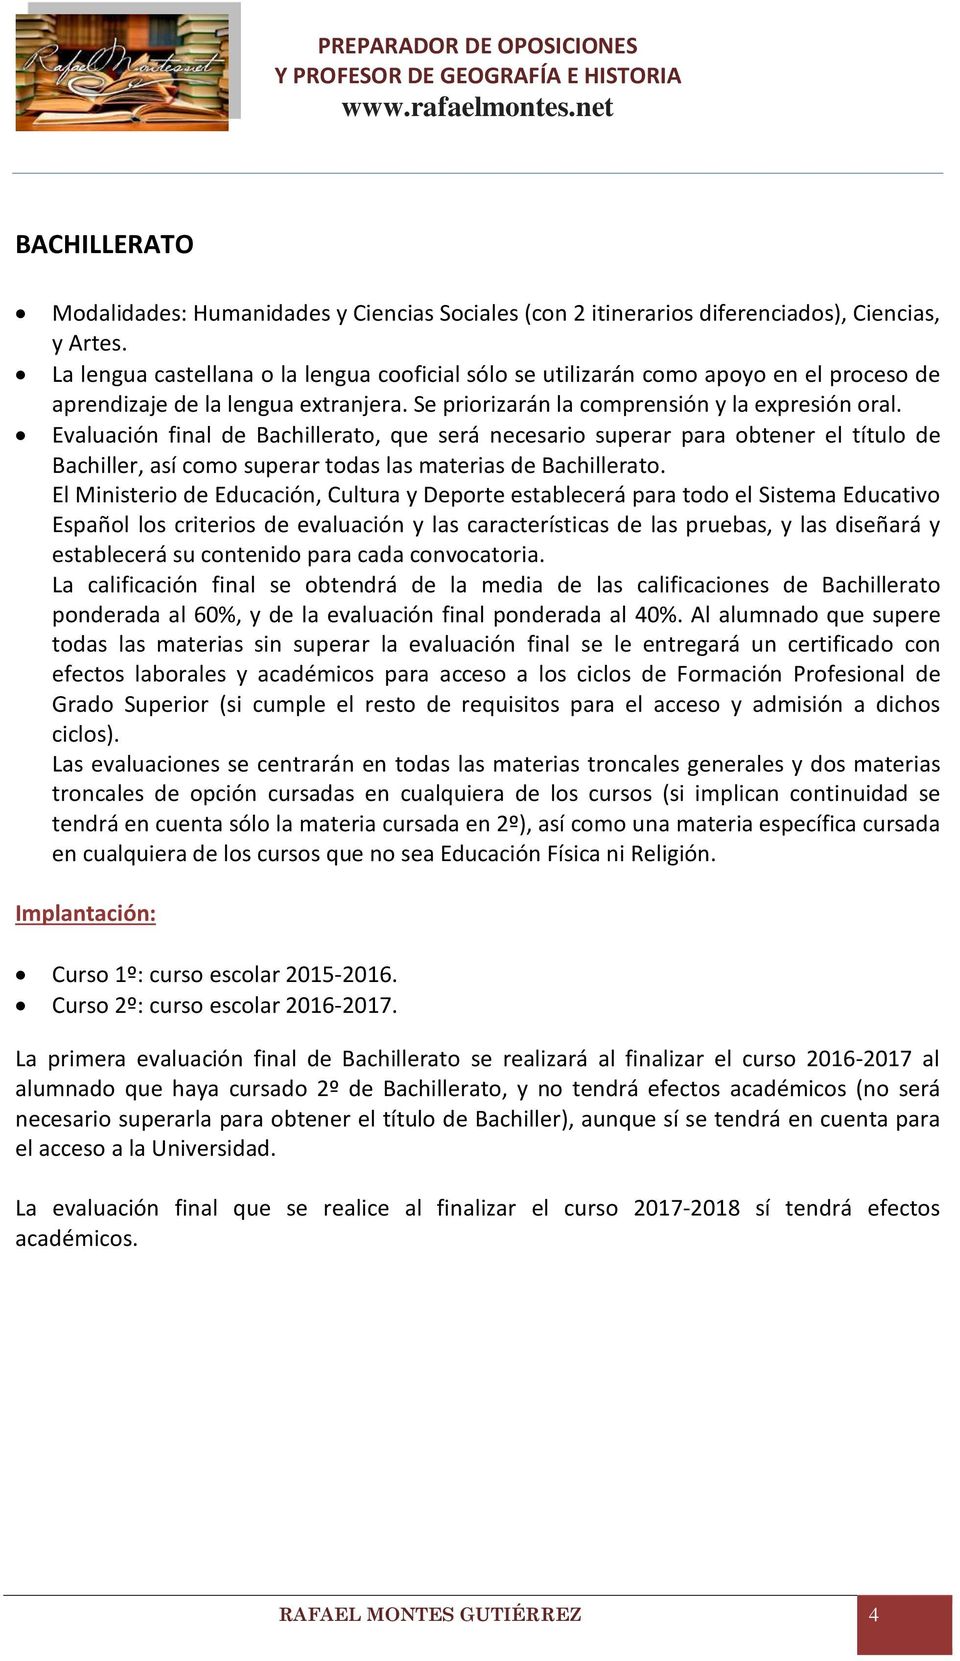 Evaluación final de Bachillerato, que será necesario superar para obtener el título de Bachiller, así como superar todas las materias de Bachillerato.